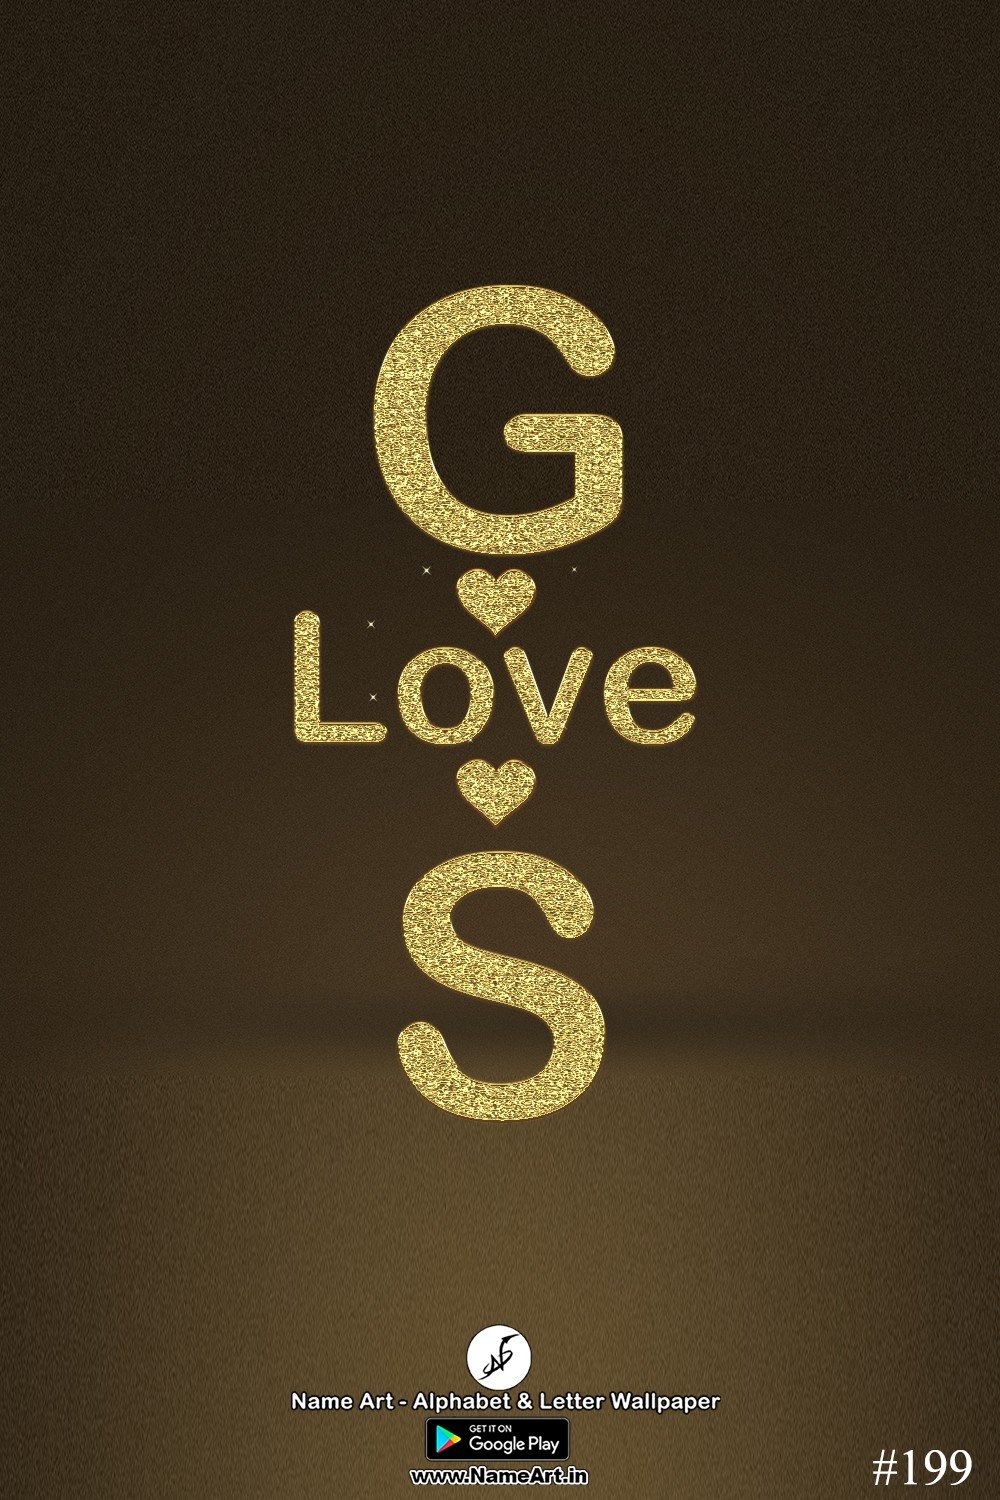 GS | Whatsapp Status DP GS | GS Golden Love Status Cute Couple Whatsapp Status DP !! | New Whatsapp Status DP GS Images |